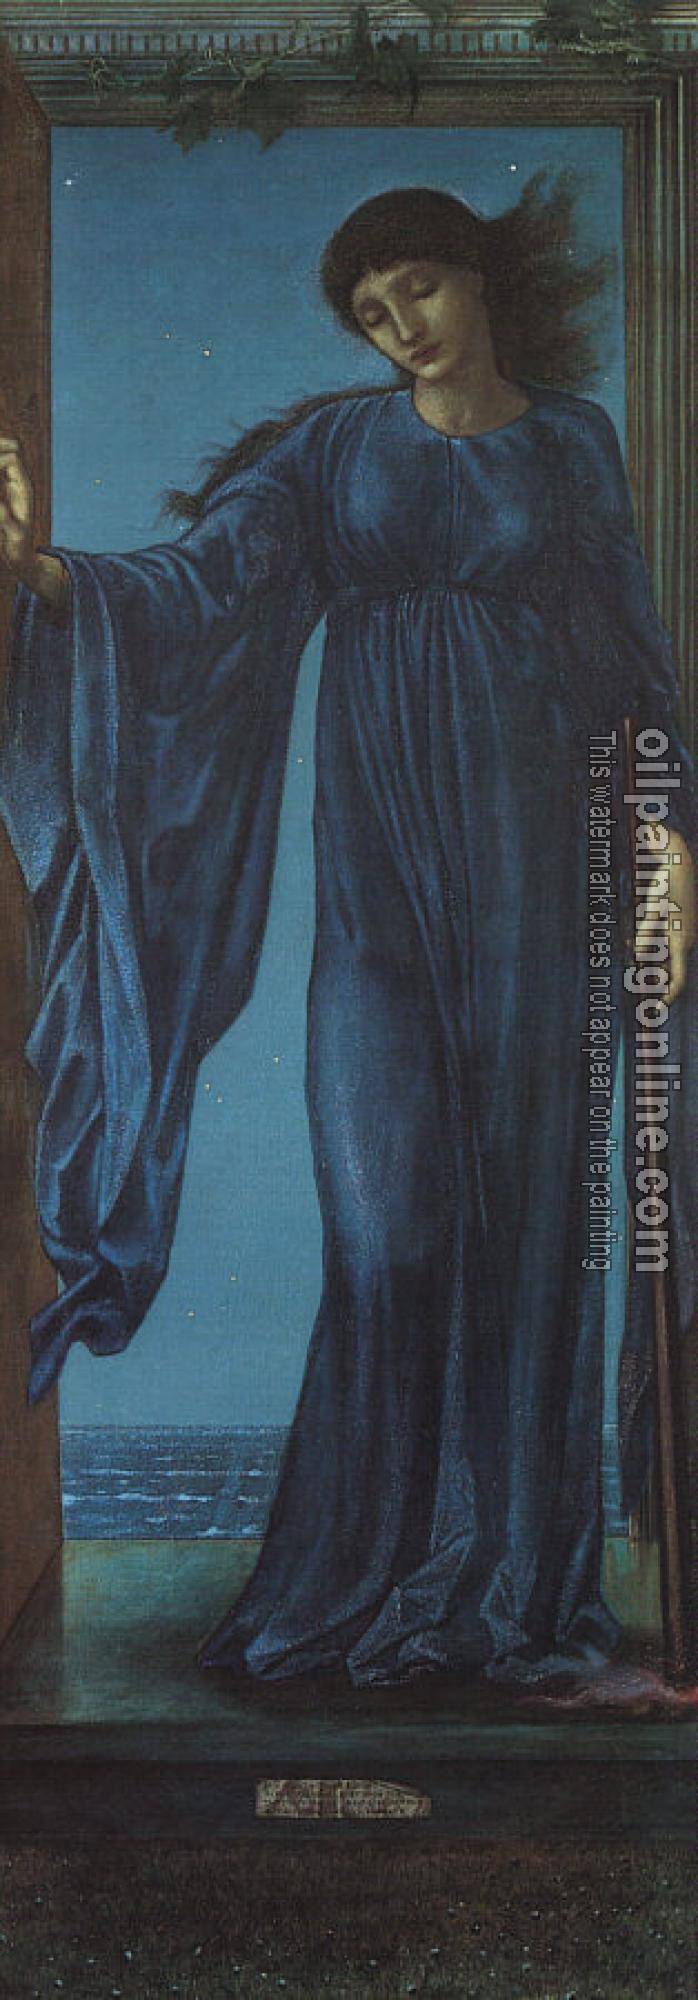 Burne-Jones, Sir Edward Coley - Night